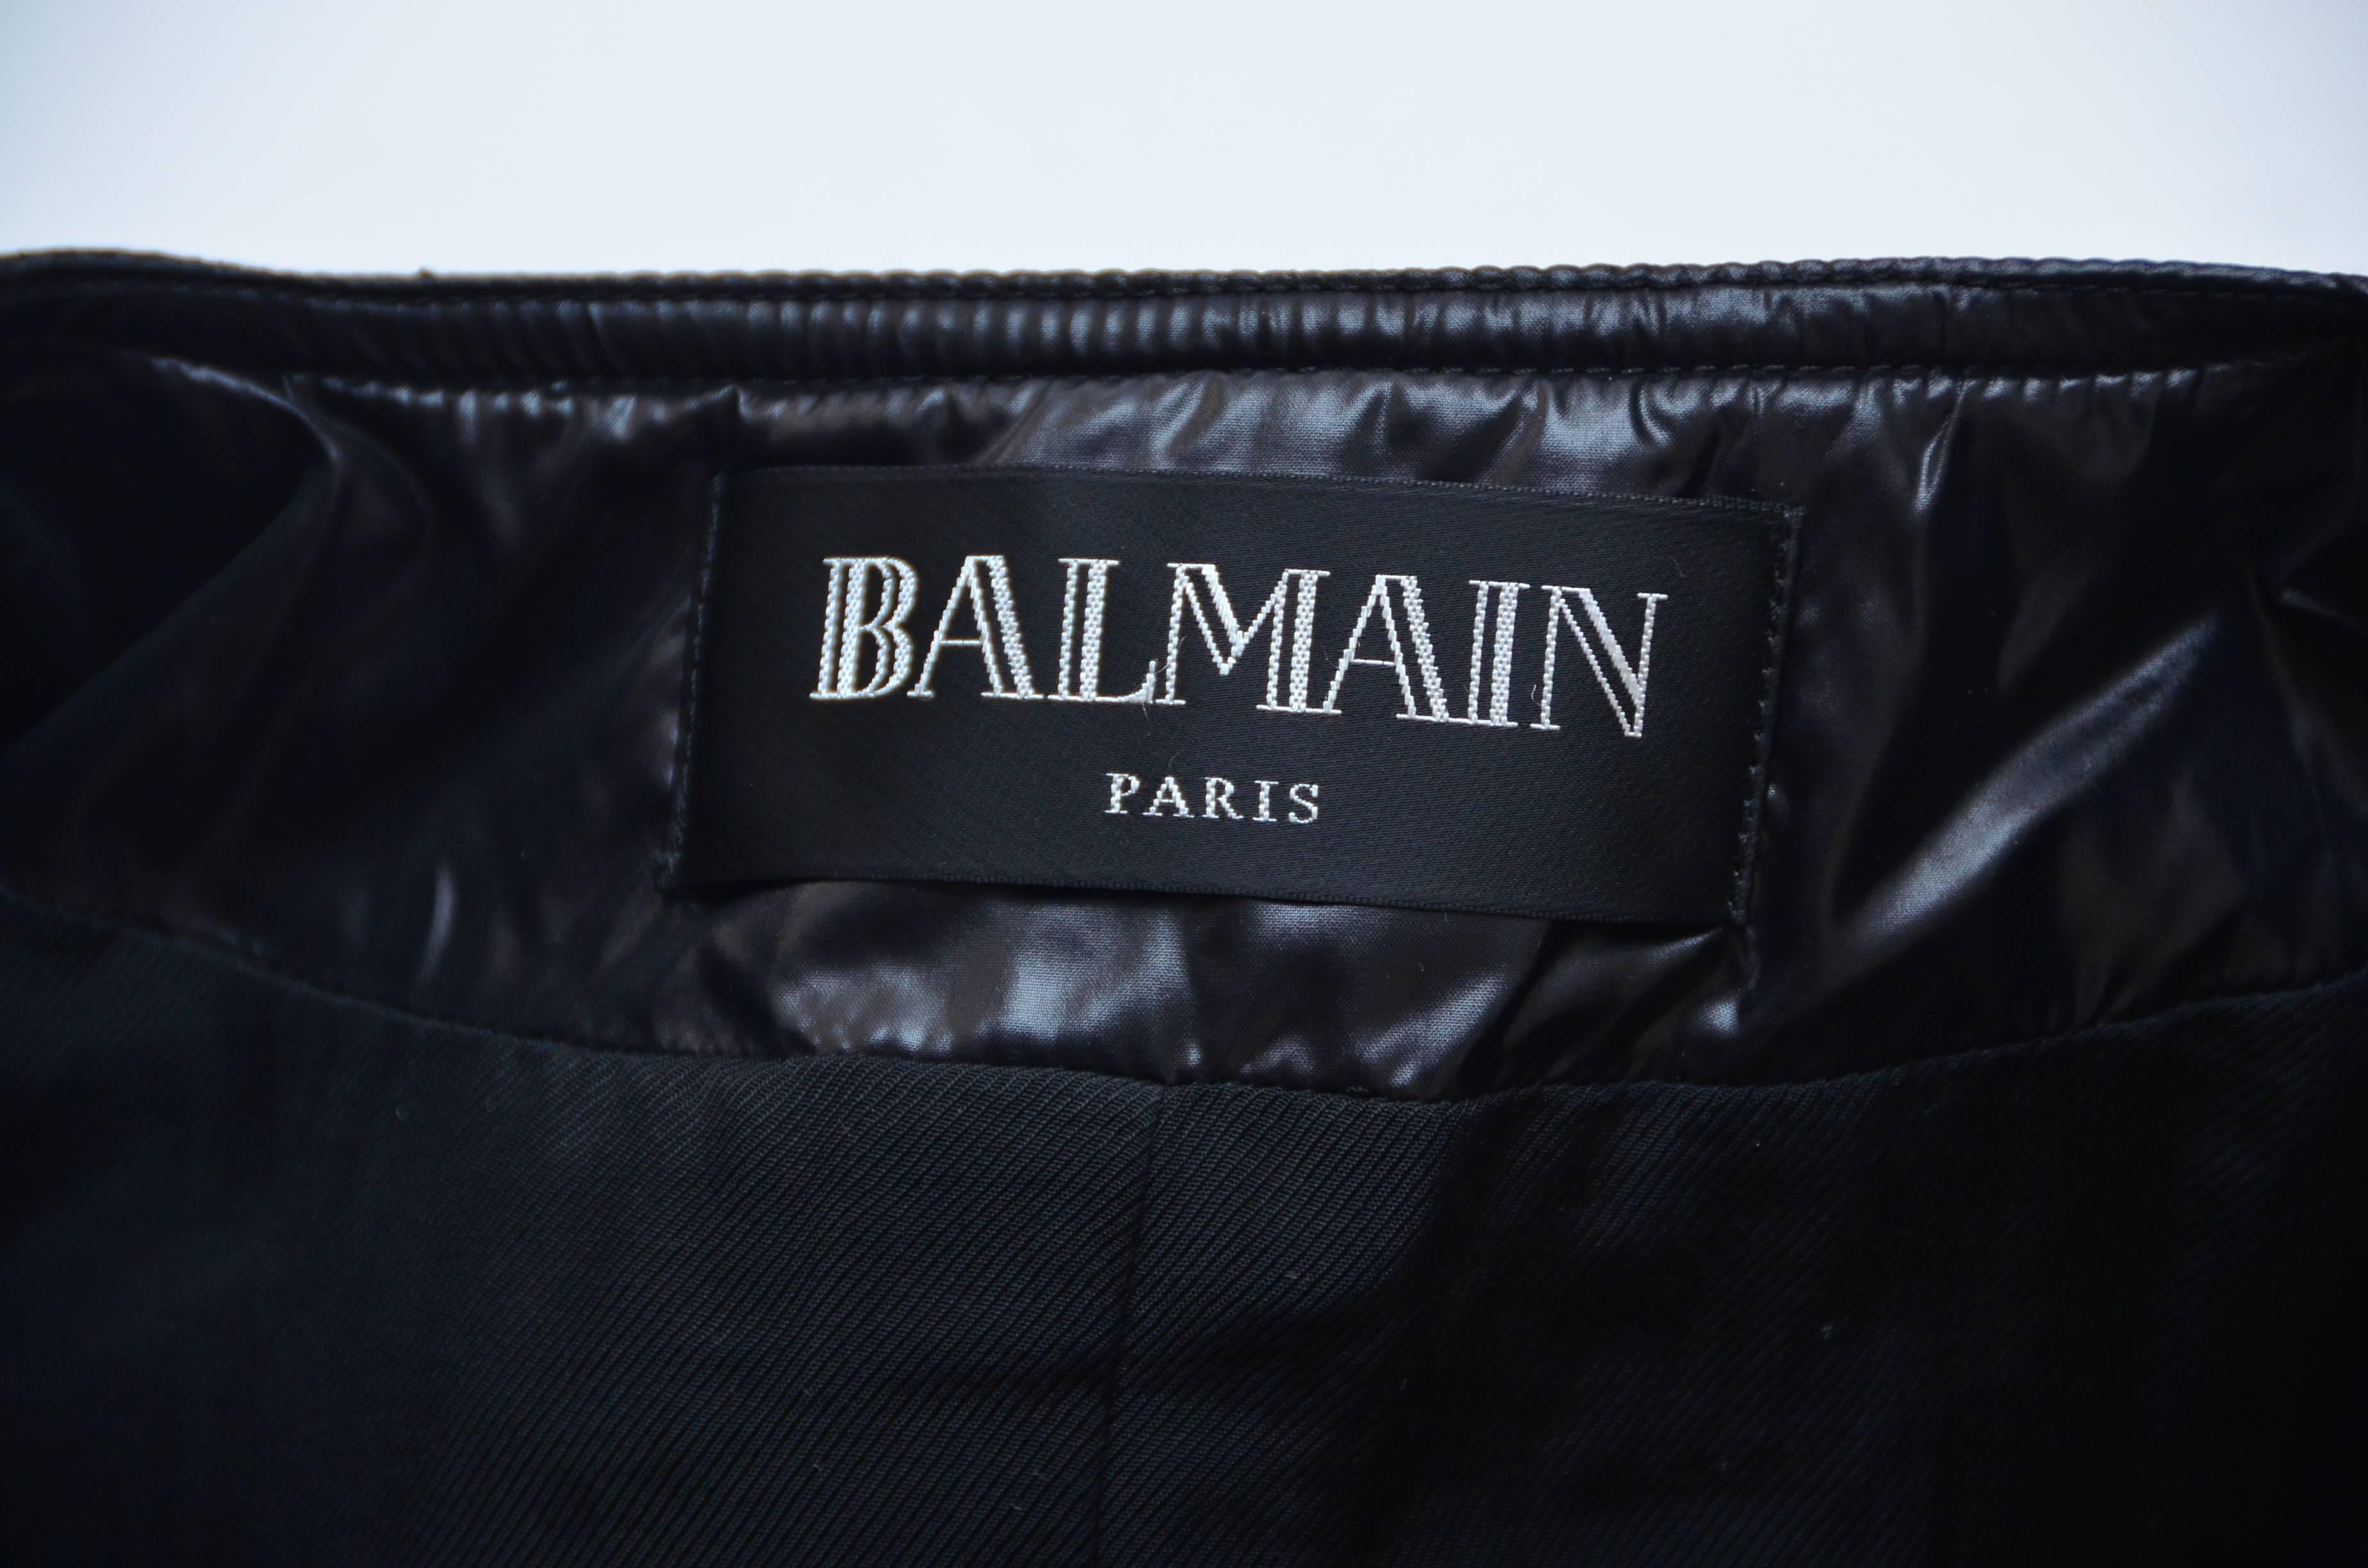 BALMAIN Black Quilted Techno Jacket Similar Seen On Beyonce And Nicki Minaj 40 2